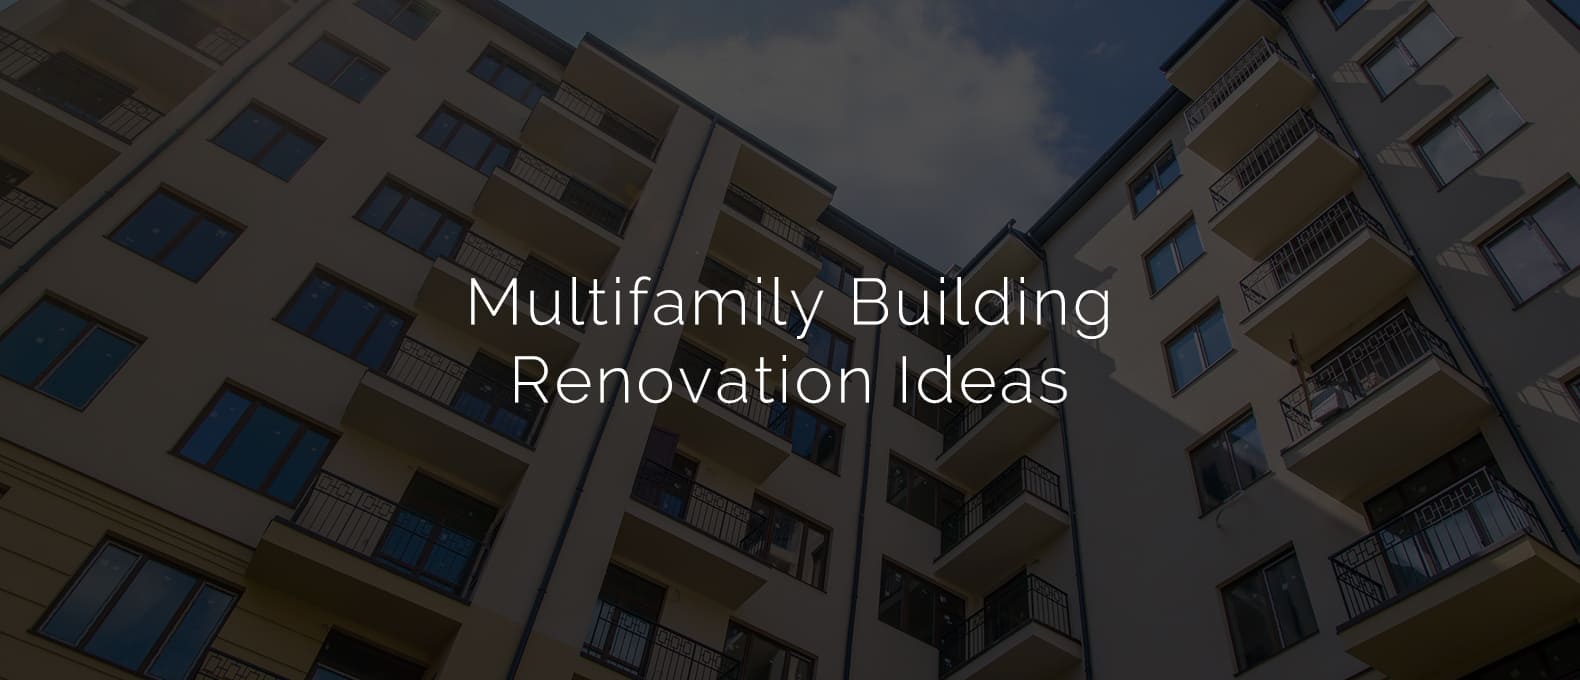 Multifamily Building Renovation Ideas